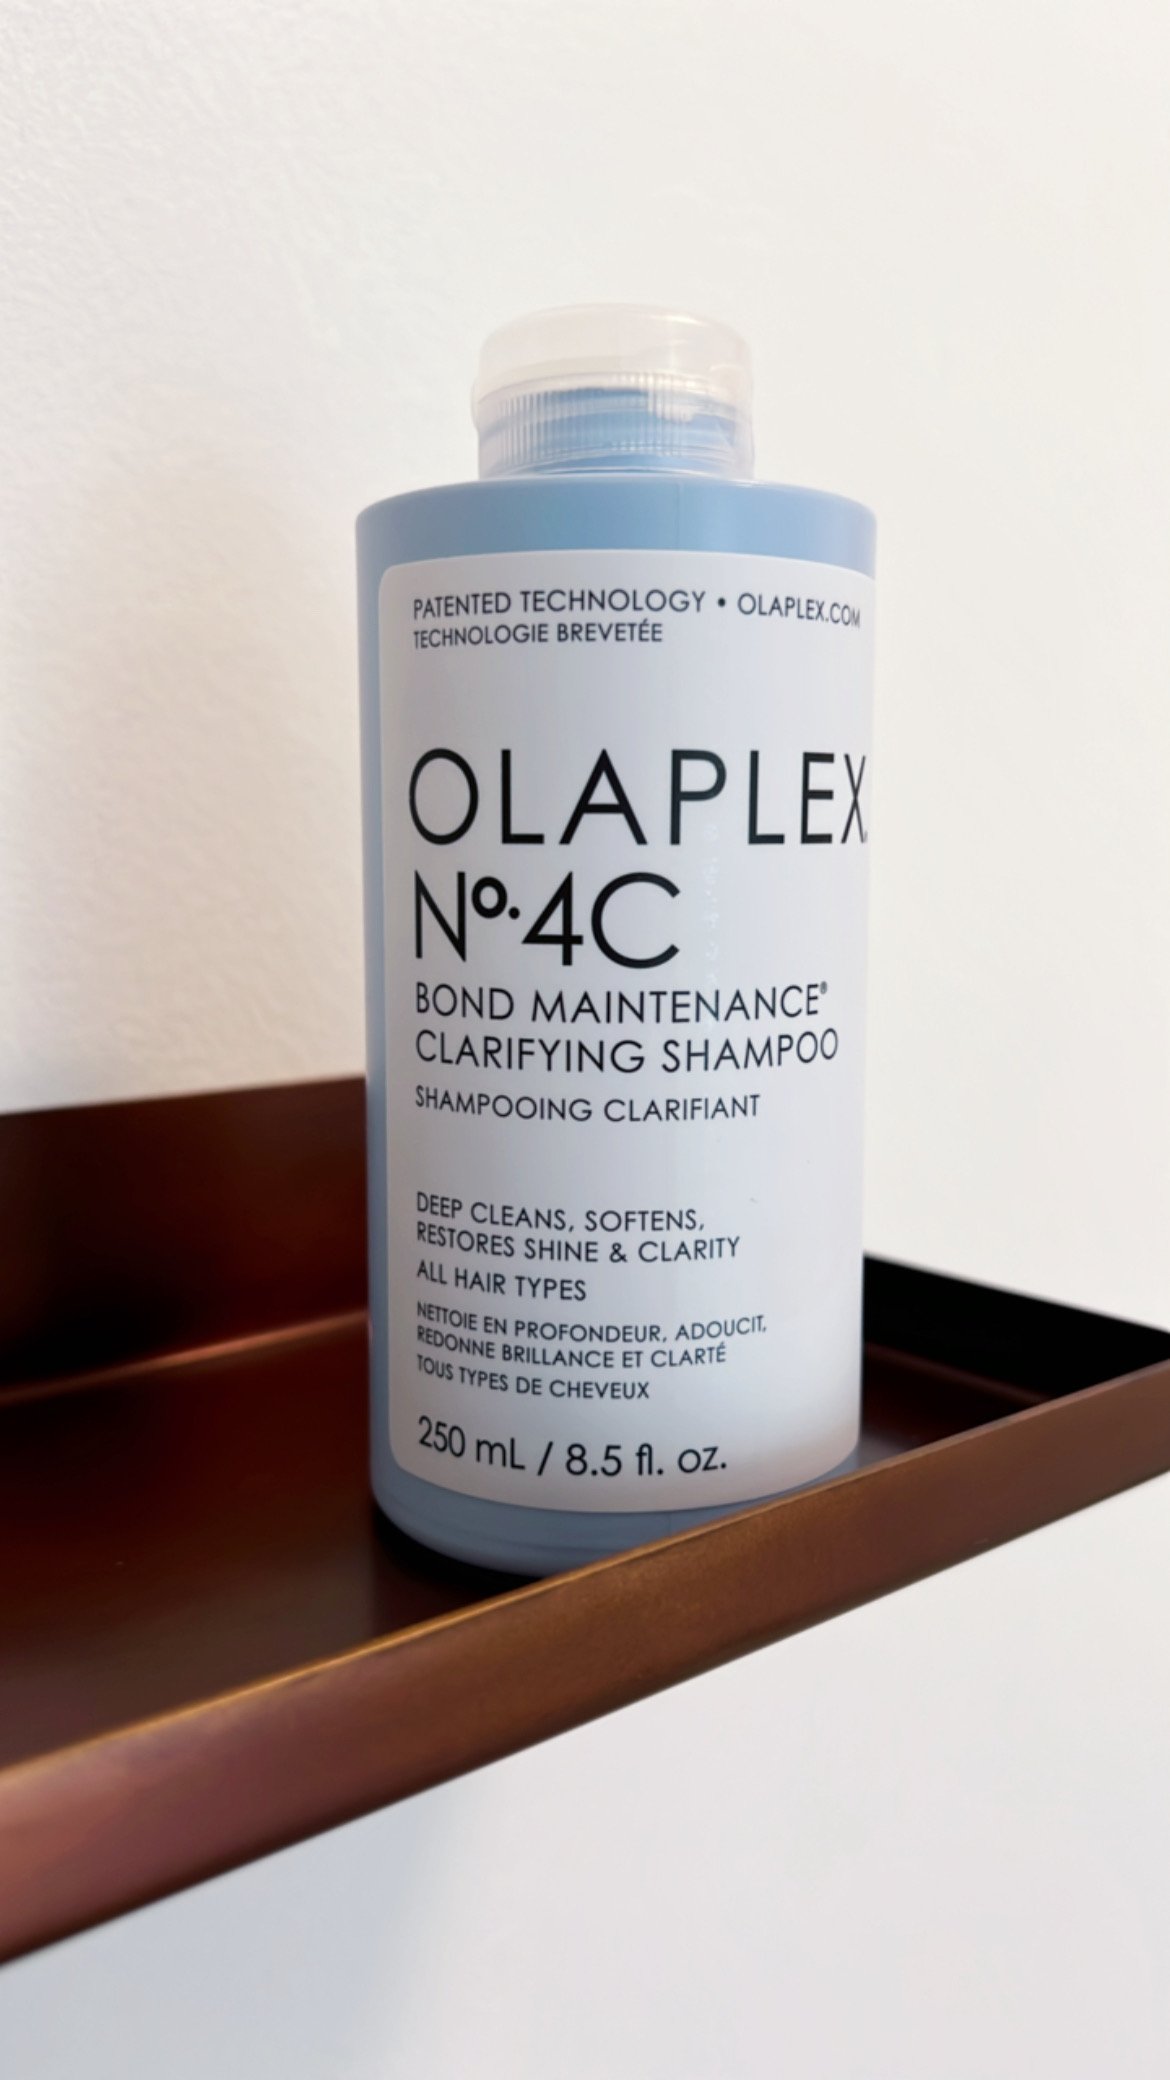 venstre Modtagelig for notifikation Olaplex NO 4C Clarifying Shampoo er en dybderensende Shampoo